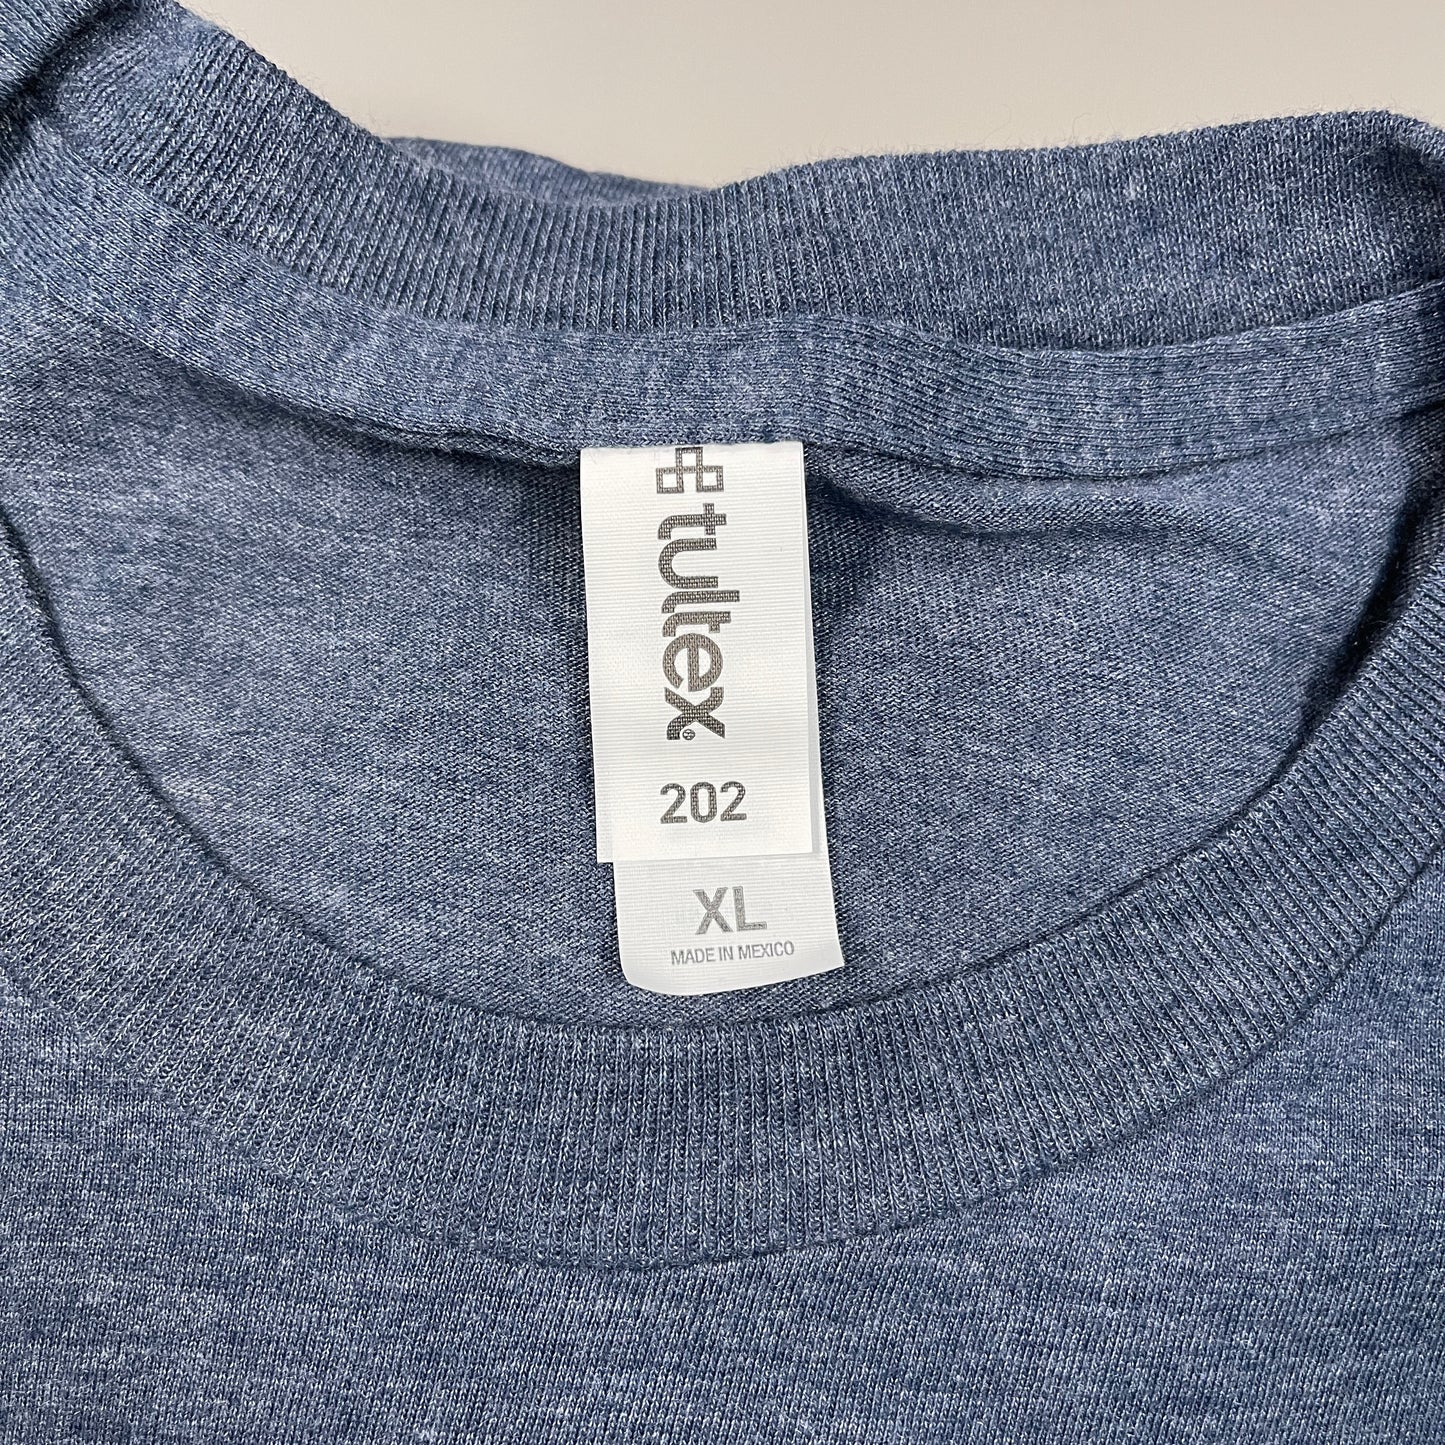 AUTISM SPEAKS Running on Kindness Fundraiser Shirt Unisex Sz XL Blue (New)